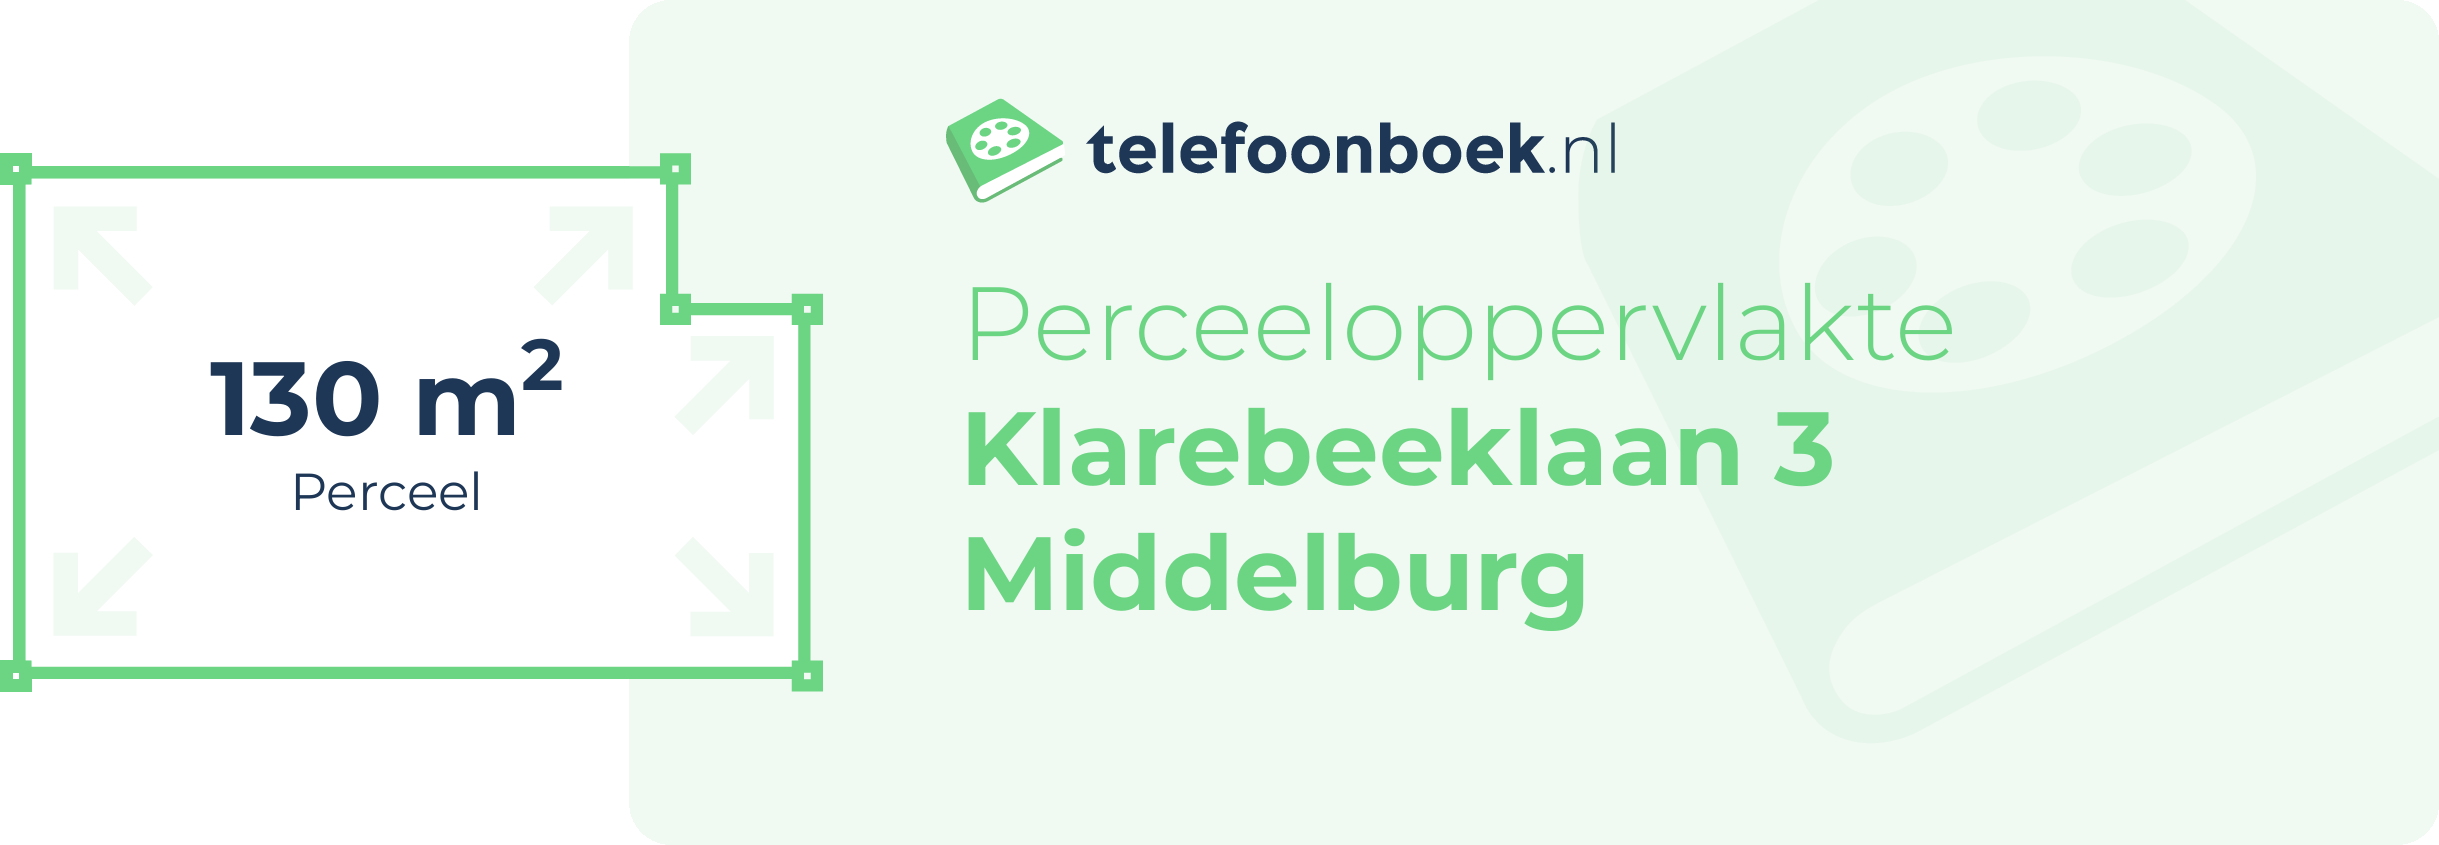 Perceeloppervlakte Klarebeeklaan 3 Middelburg